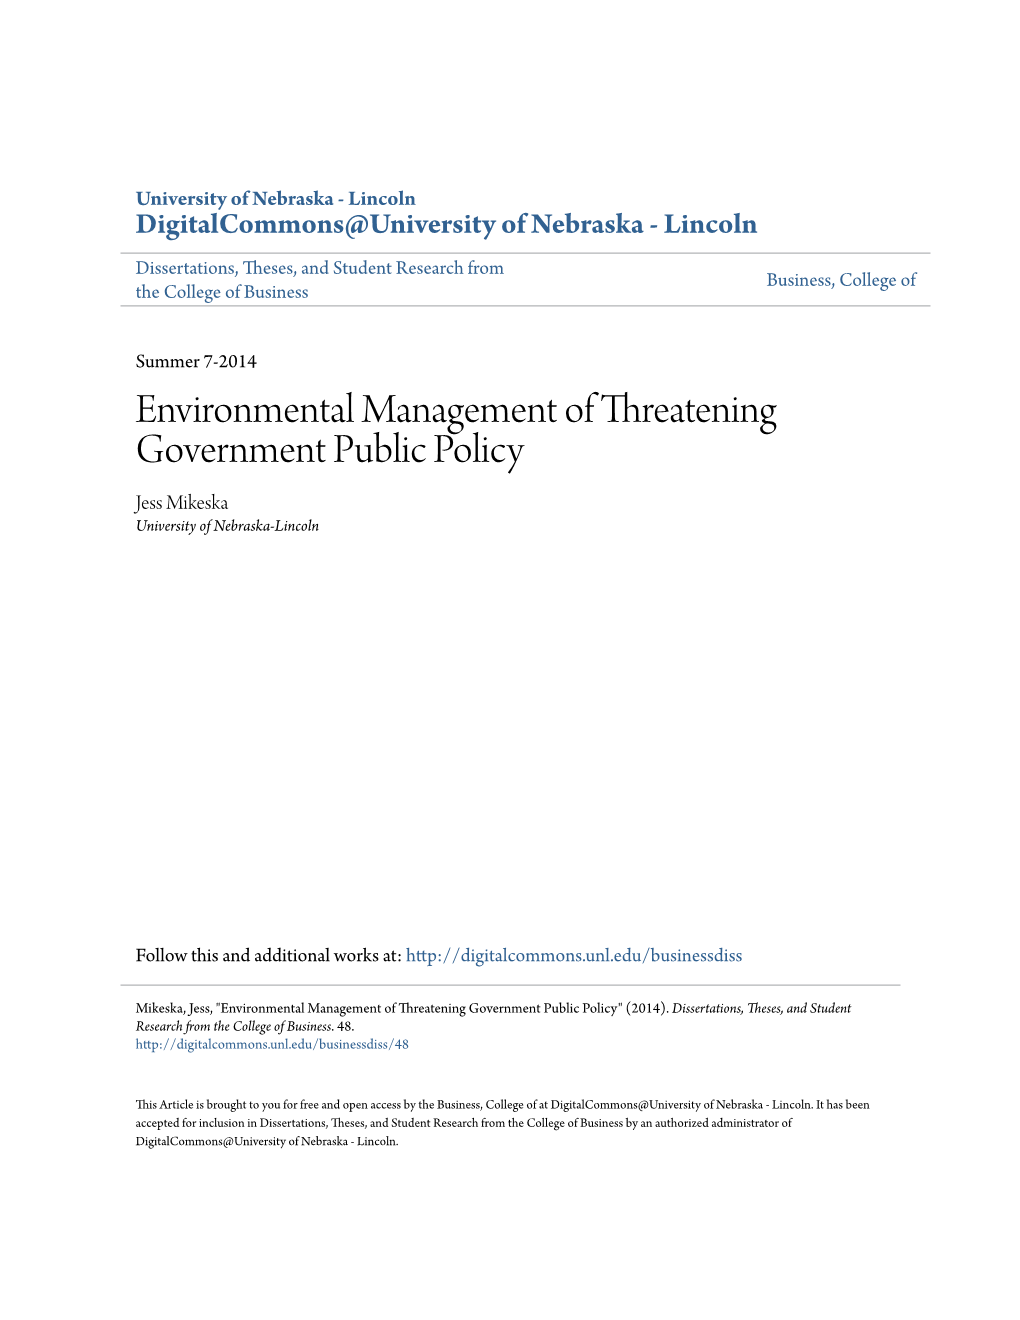 Environmental Management of Threatening Government Public Policy Jess Mikeska University of Nebraska-Lincoln